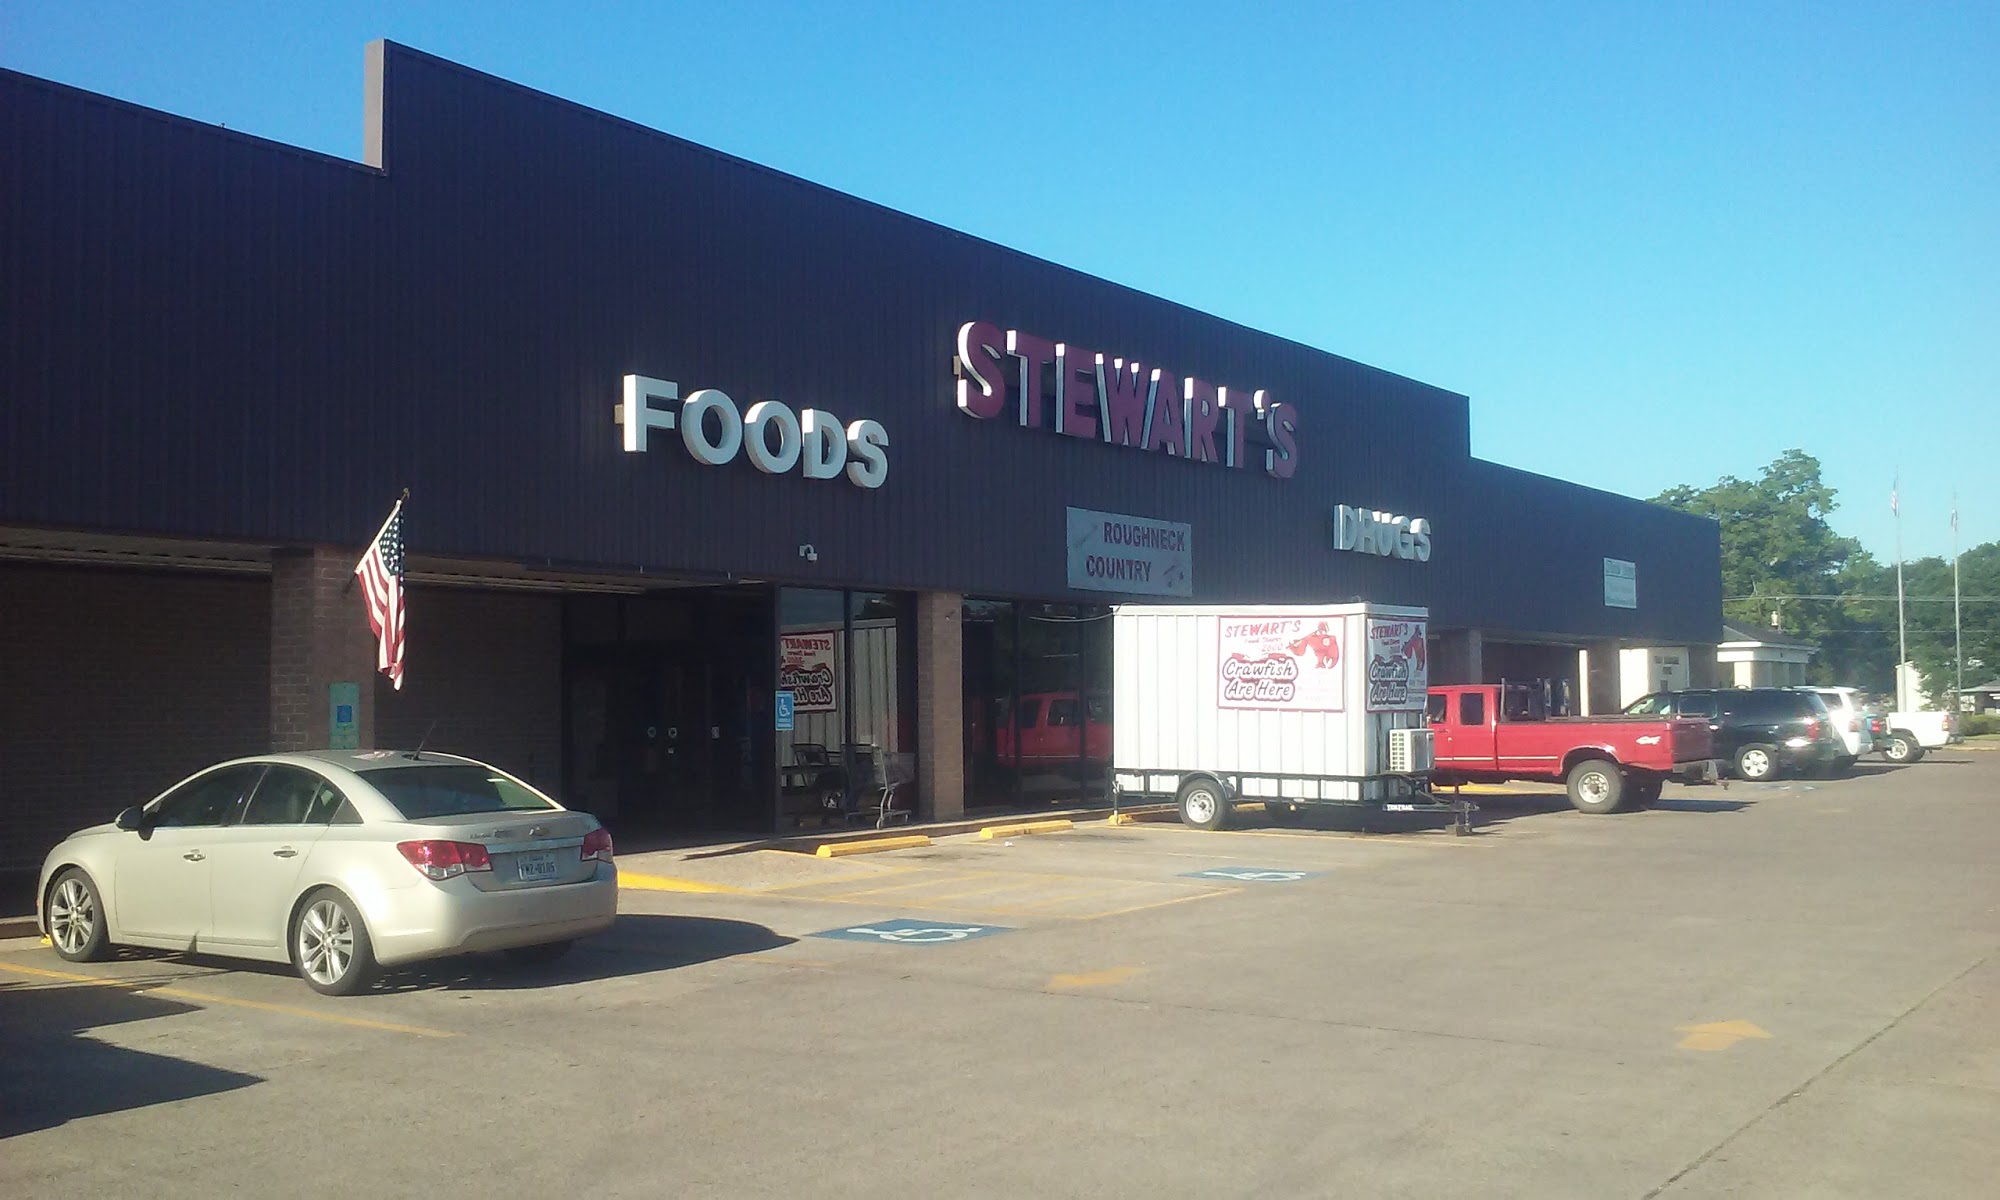 Stewart's Food Store